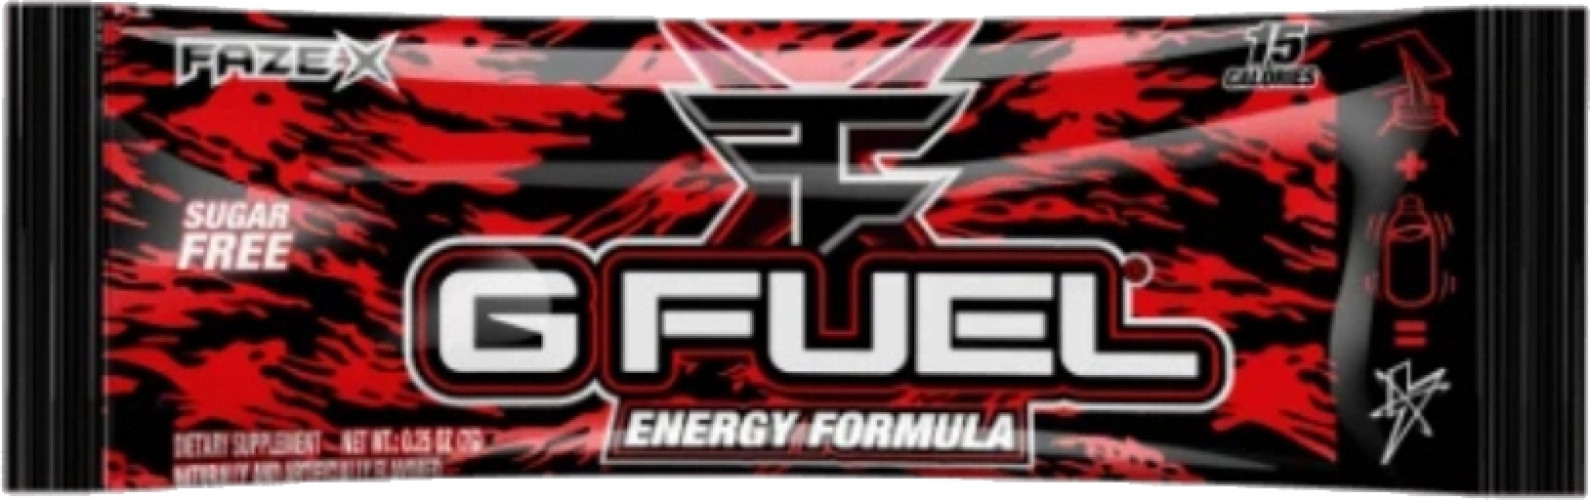 GFuel Energy Formula - Faze X Sample